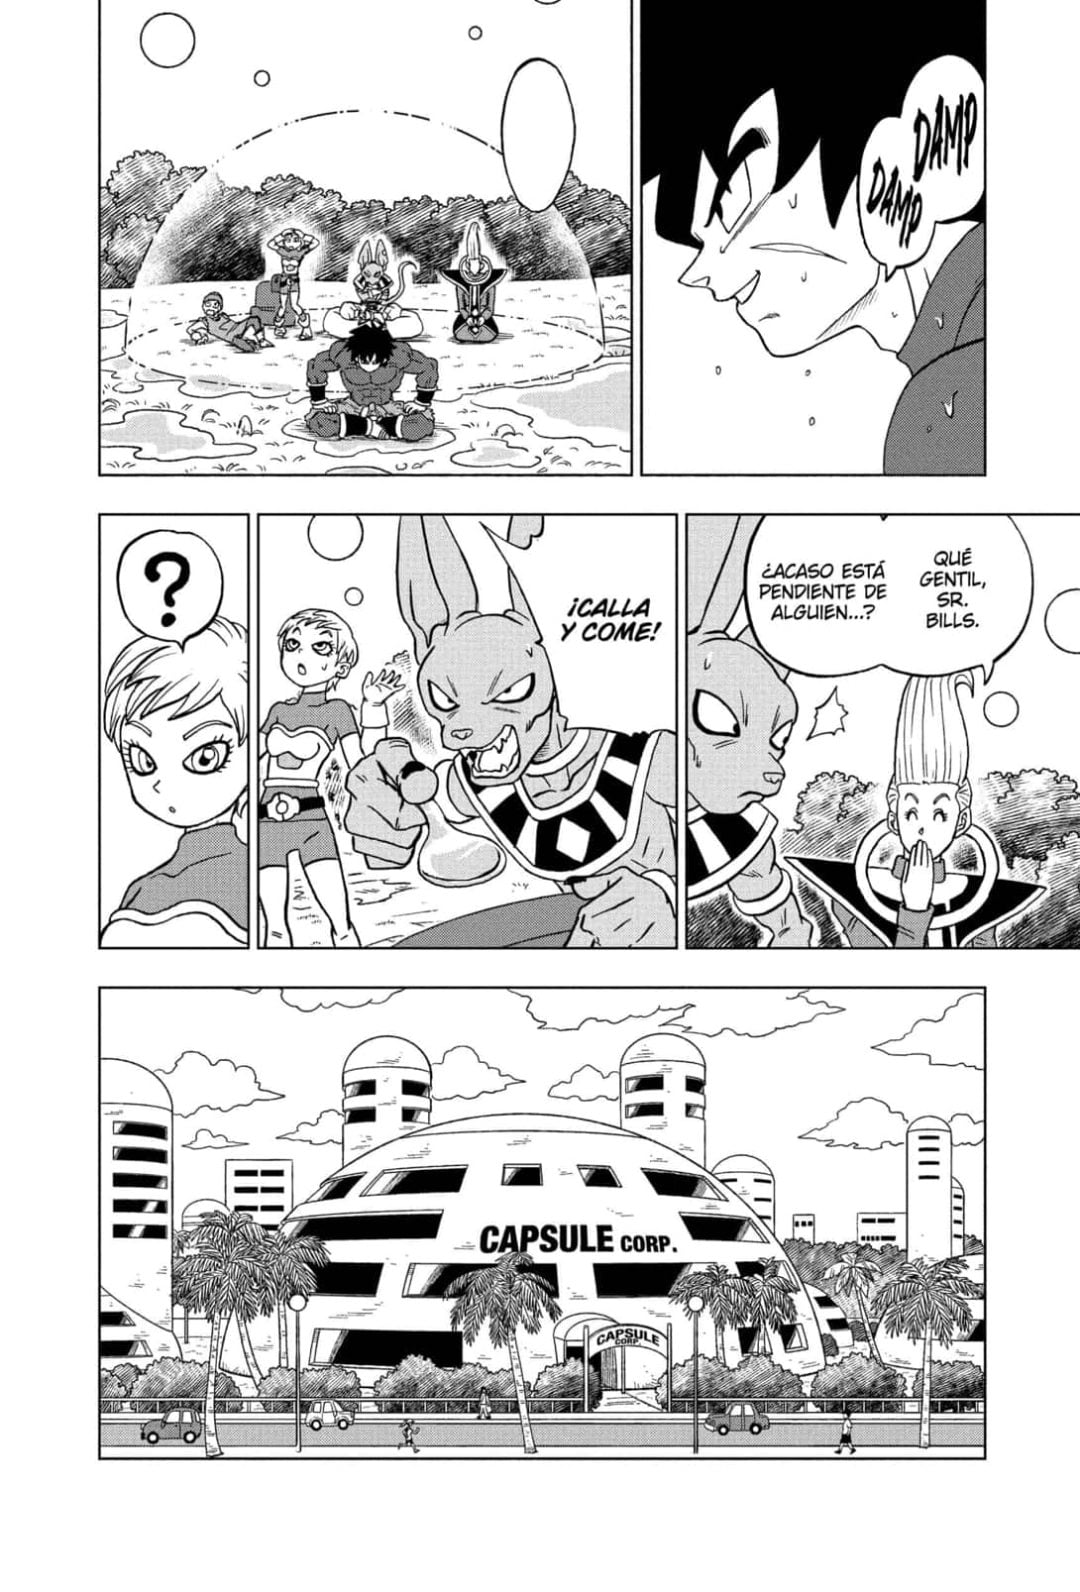 Leer Dragon Ball Super Manga Capitulo 93 en Español Gratis Online